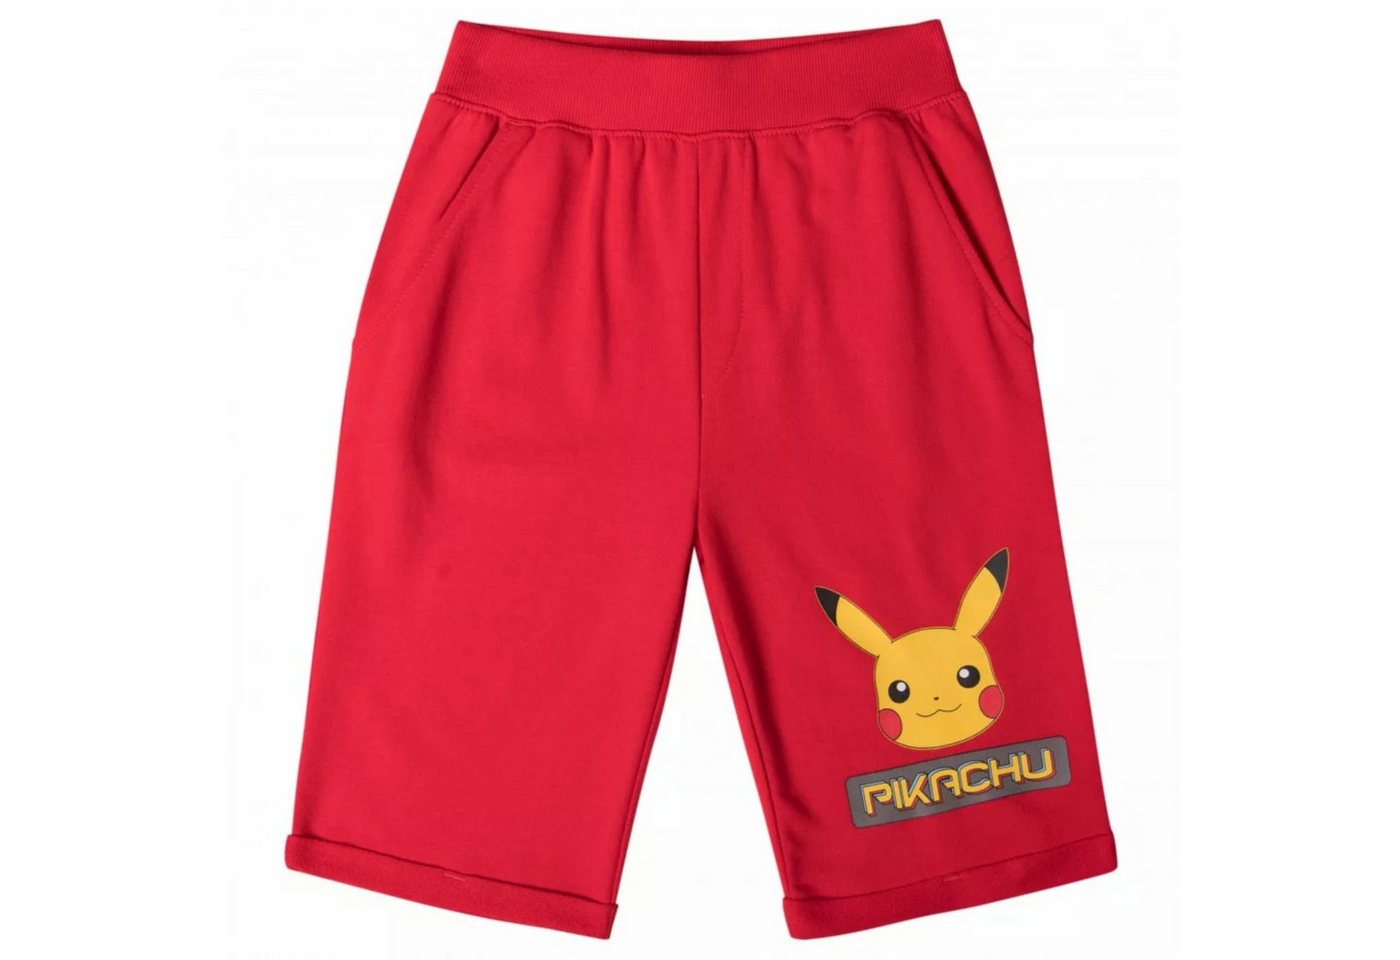 POKÉMON Shorts Pokemon Pikachu Jungen Kinder Sommer Shorts Gr. 110 biis 152, Rot Grau von POKÉMON